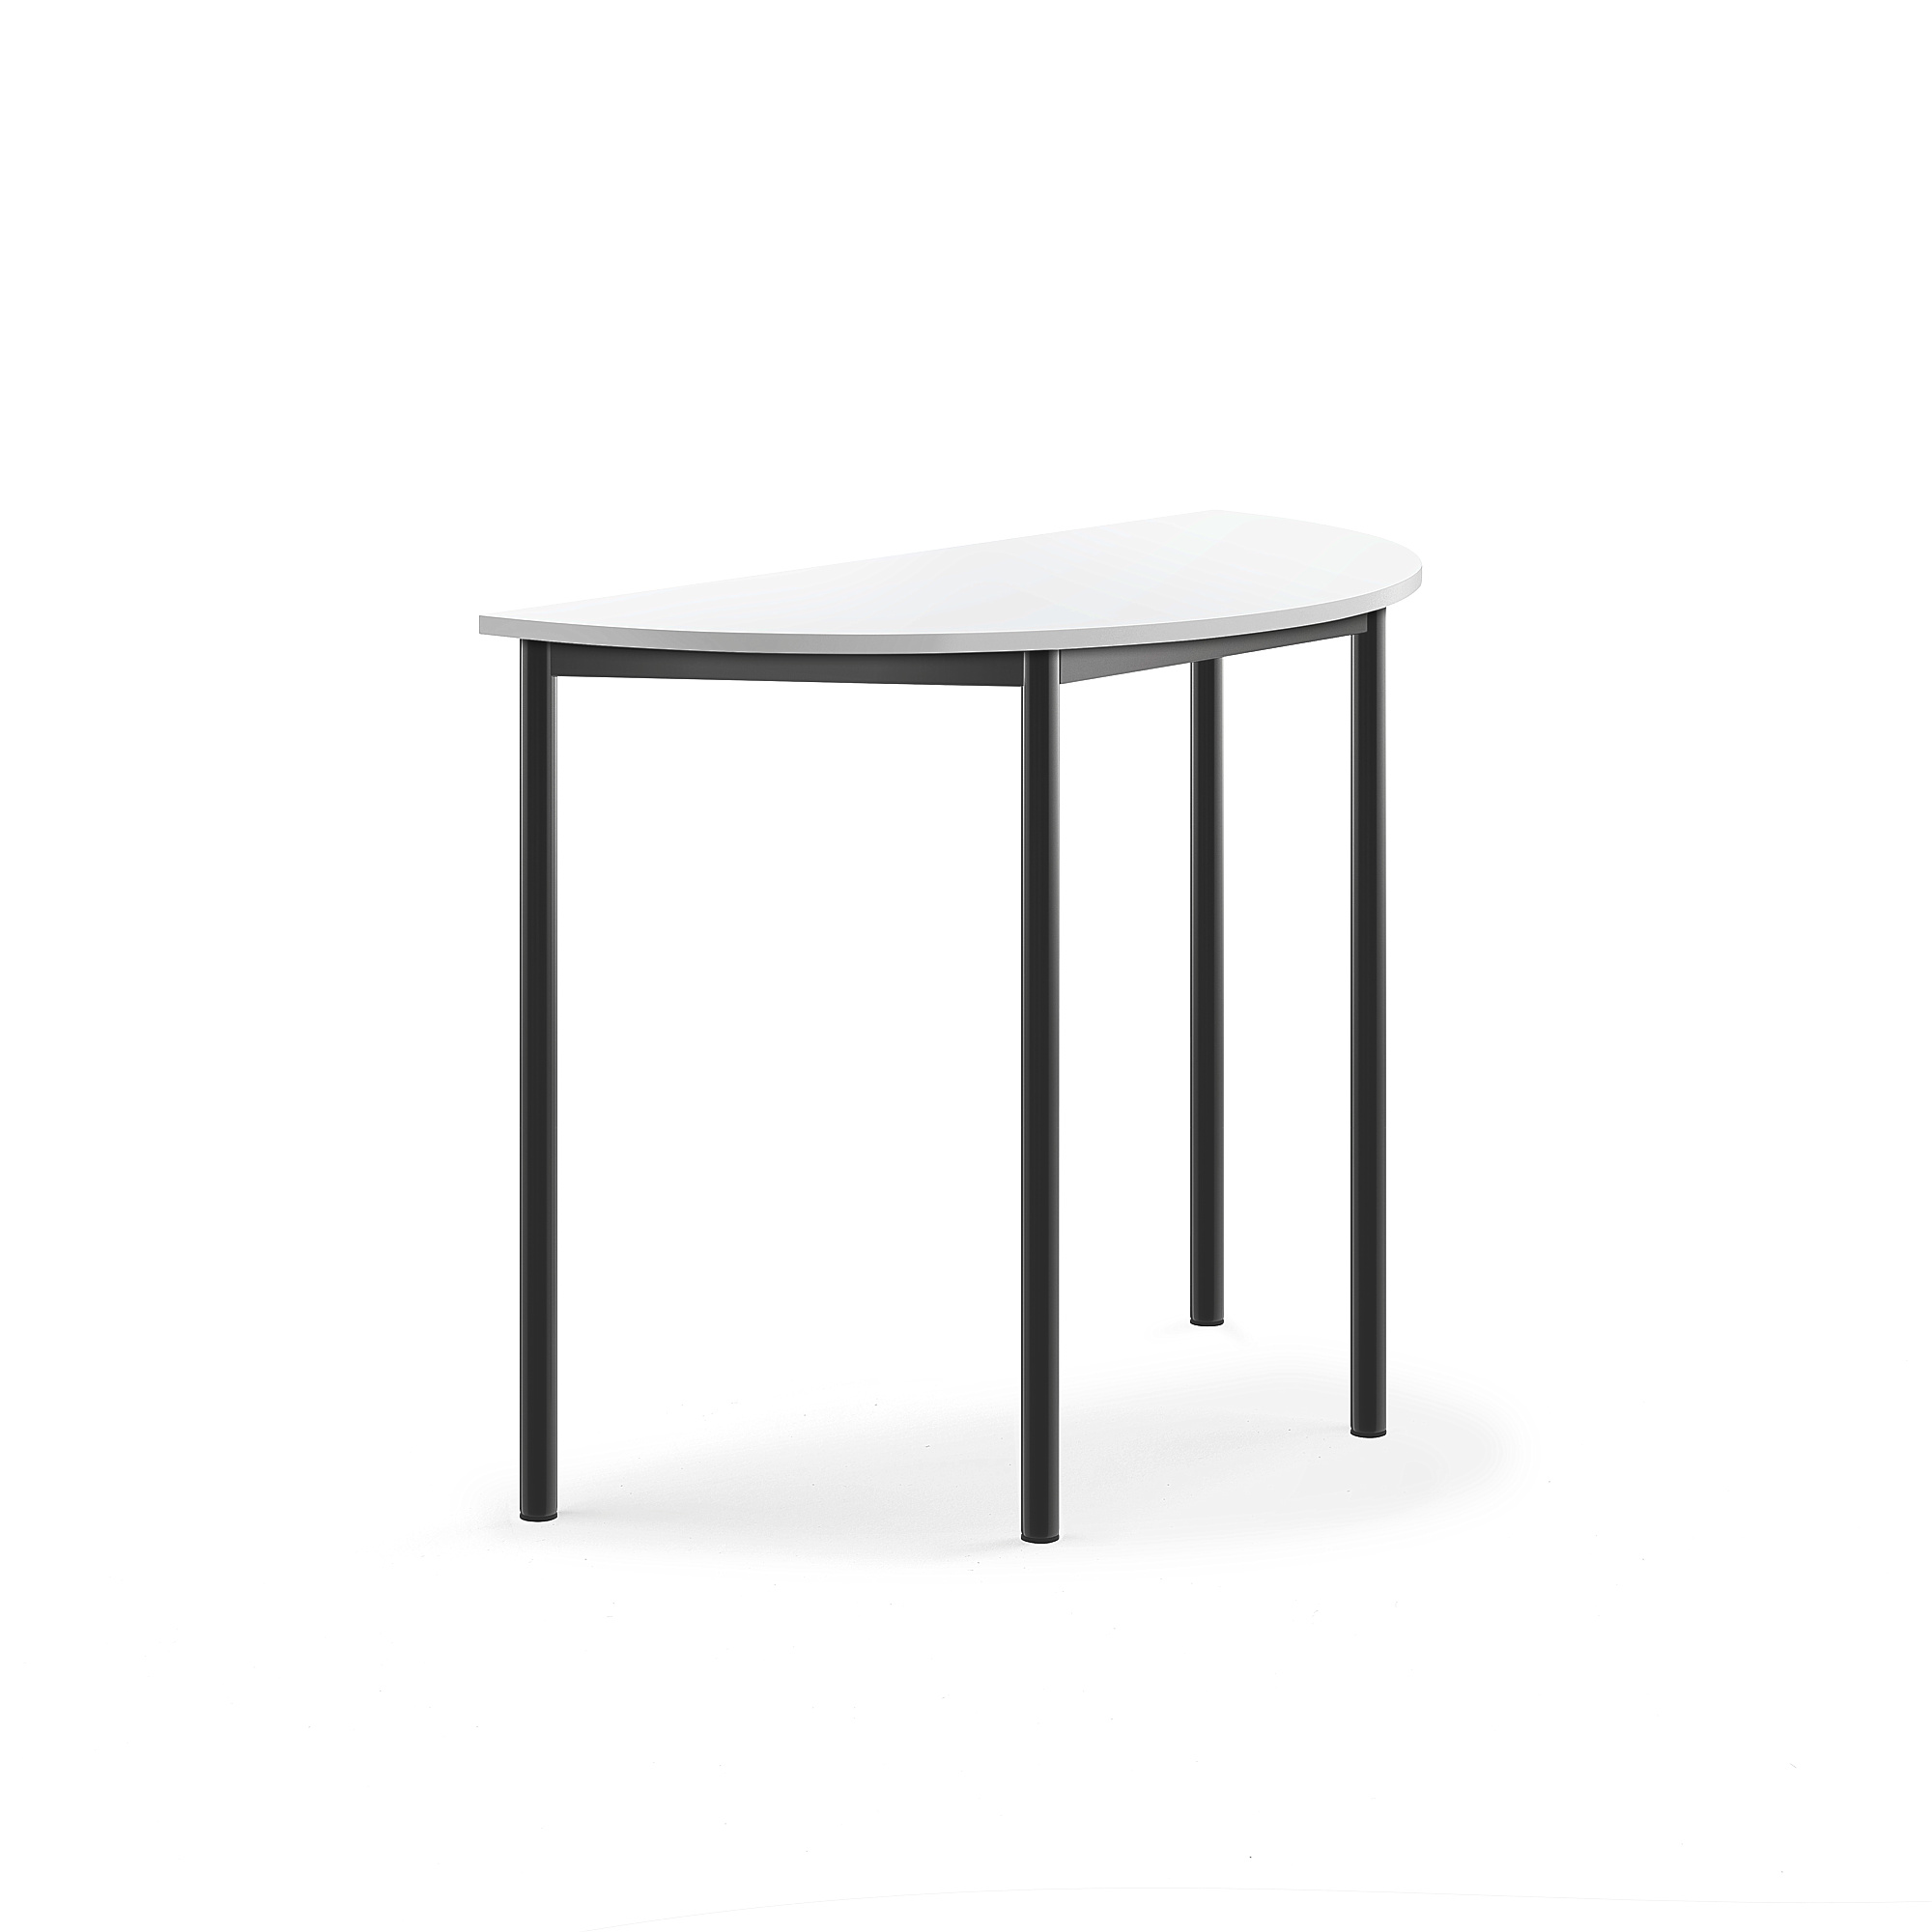 Stůl BORÅS, půlkruh, 1200x600x900 mm, antracitově šedé nohy, HPL deska, bílá